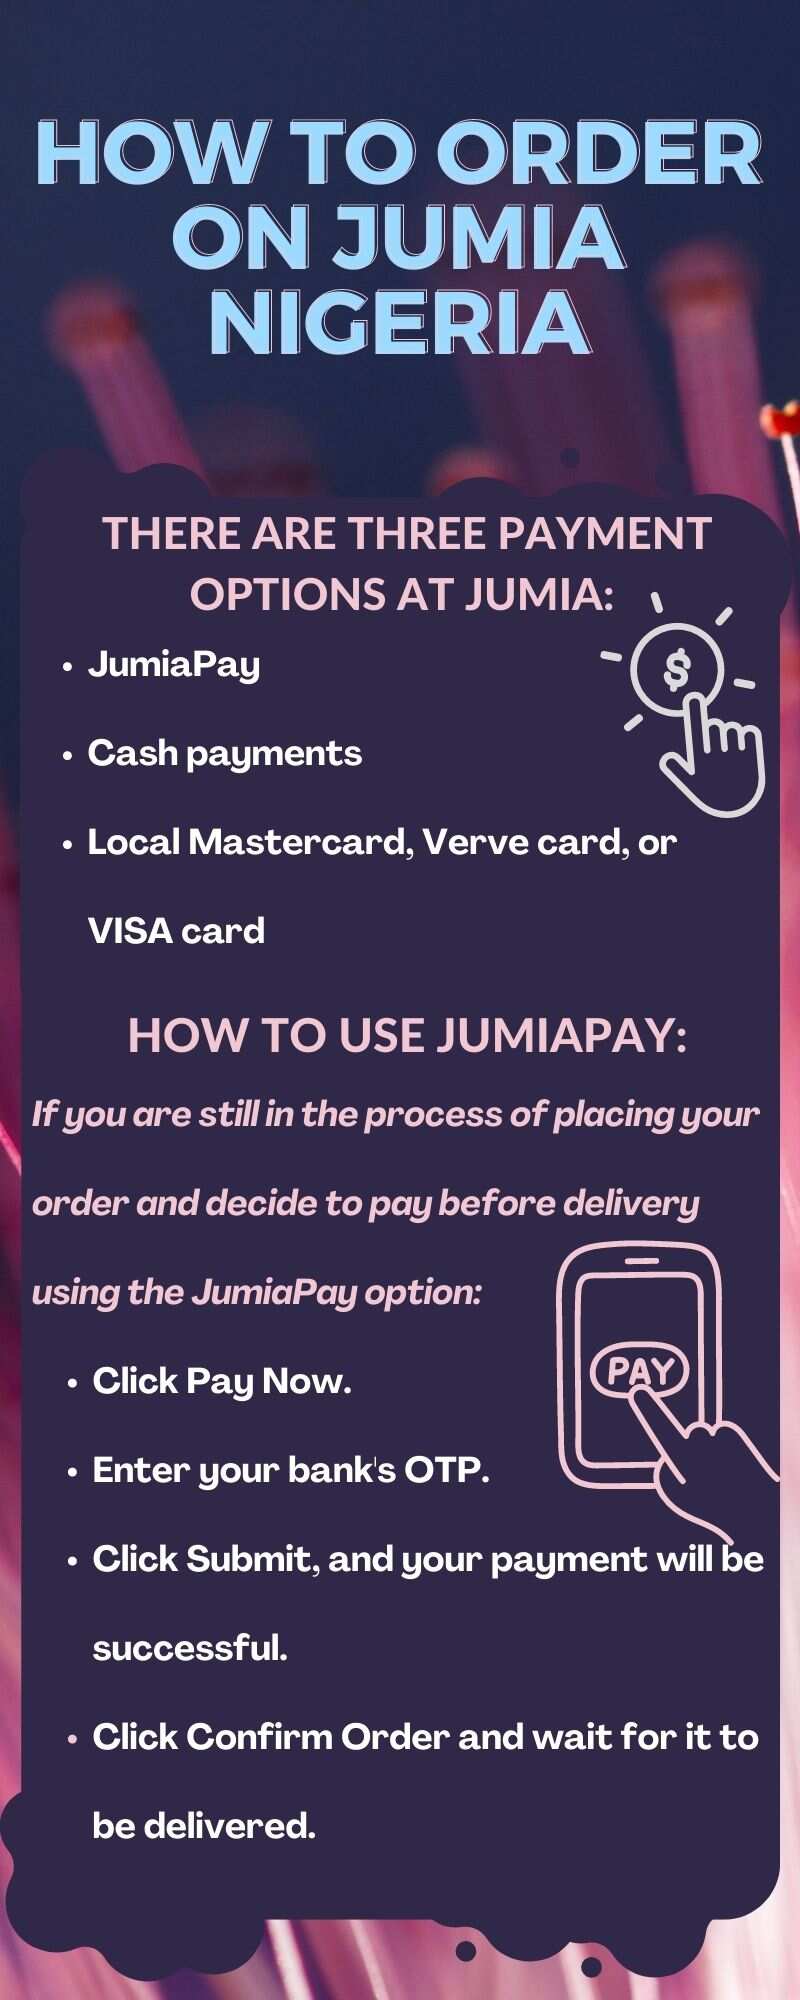 How to order on Jumia Nigeria